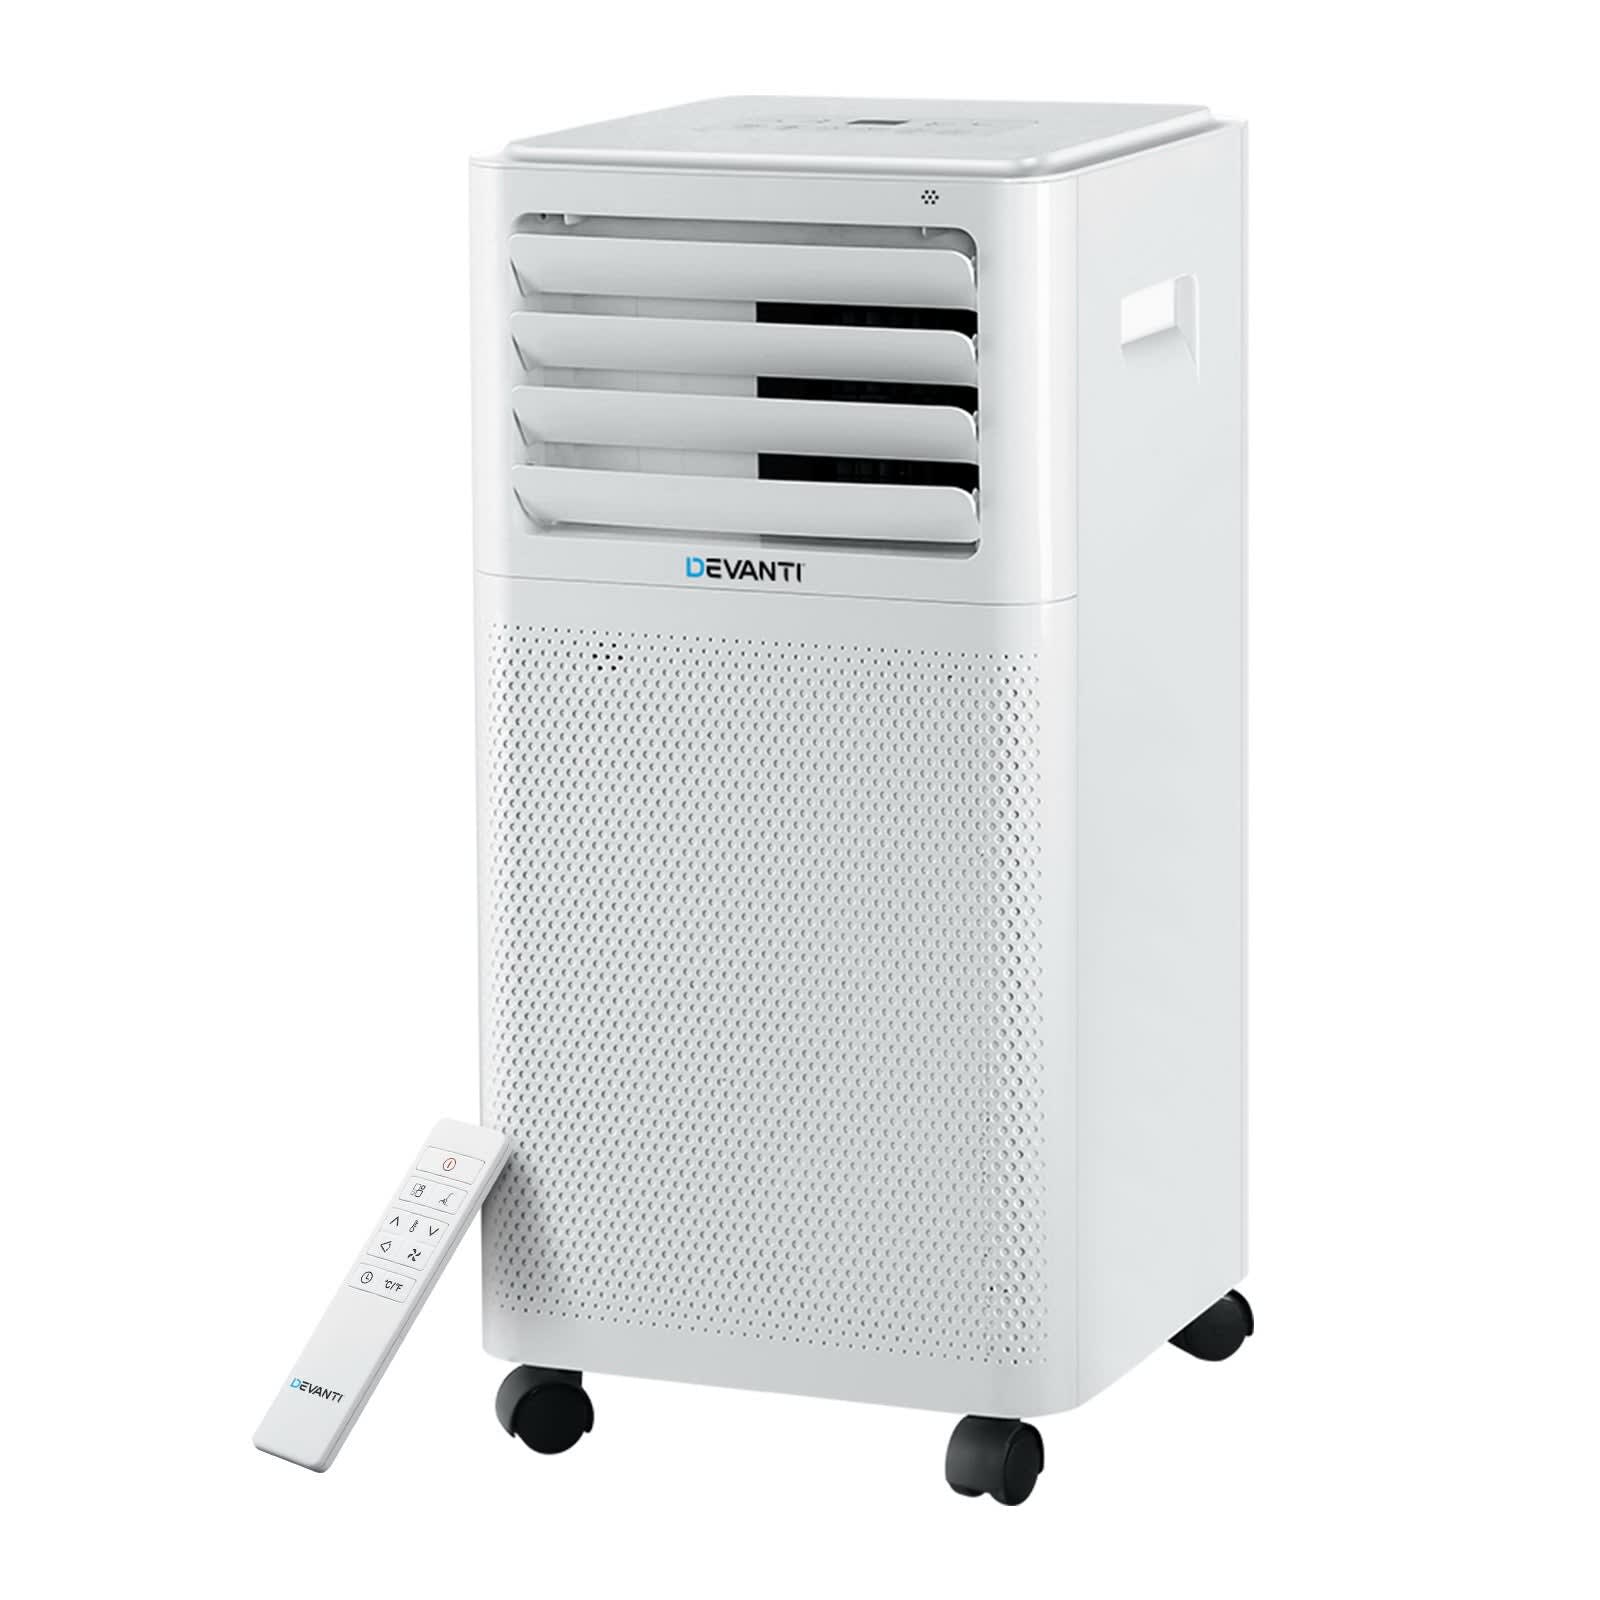 NNEDSZ Devanti Portable Air Conditioner Window Kit Cooling Mobile Fan_1